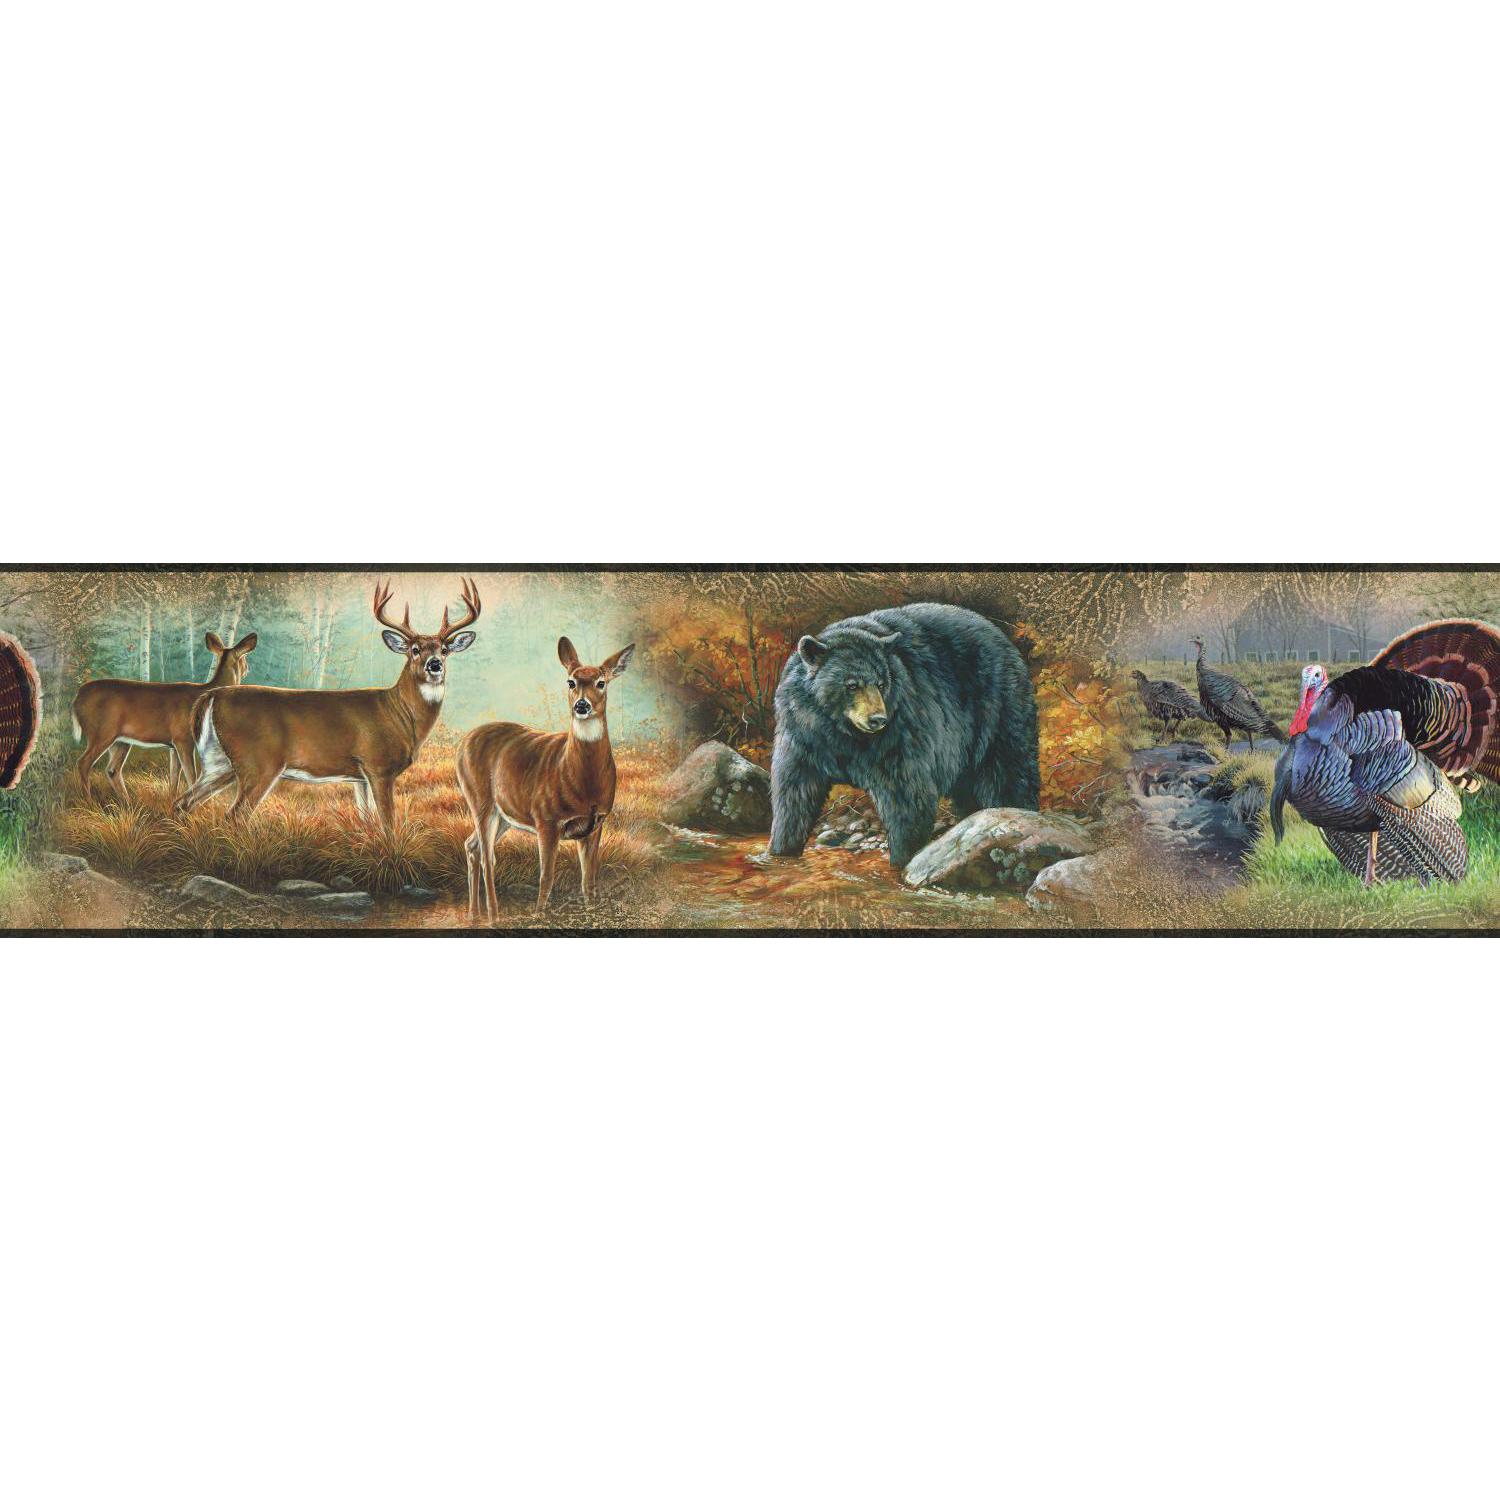  Border Peel Amp Stick Wallpaper Wildlife Hunting Room Decor eBay 1500x1500